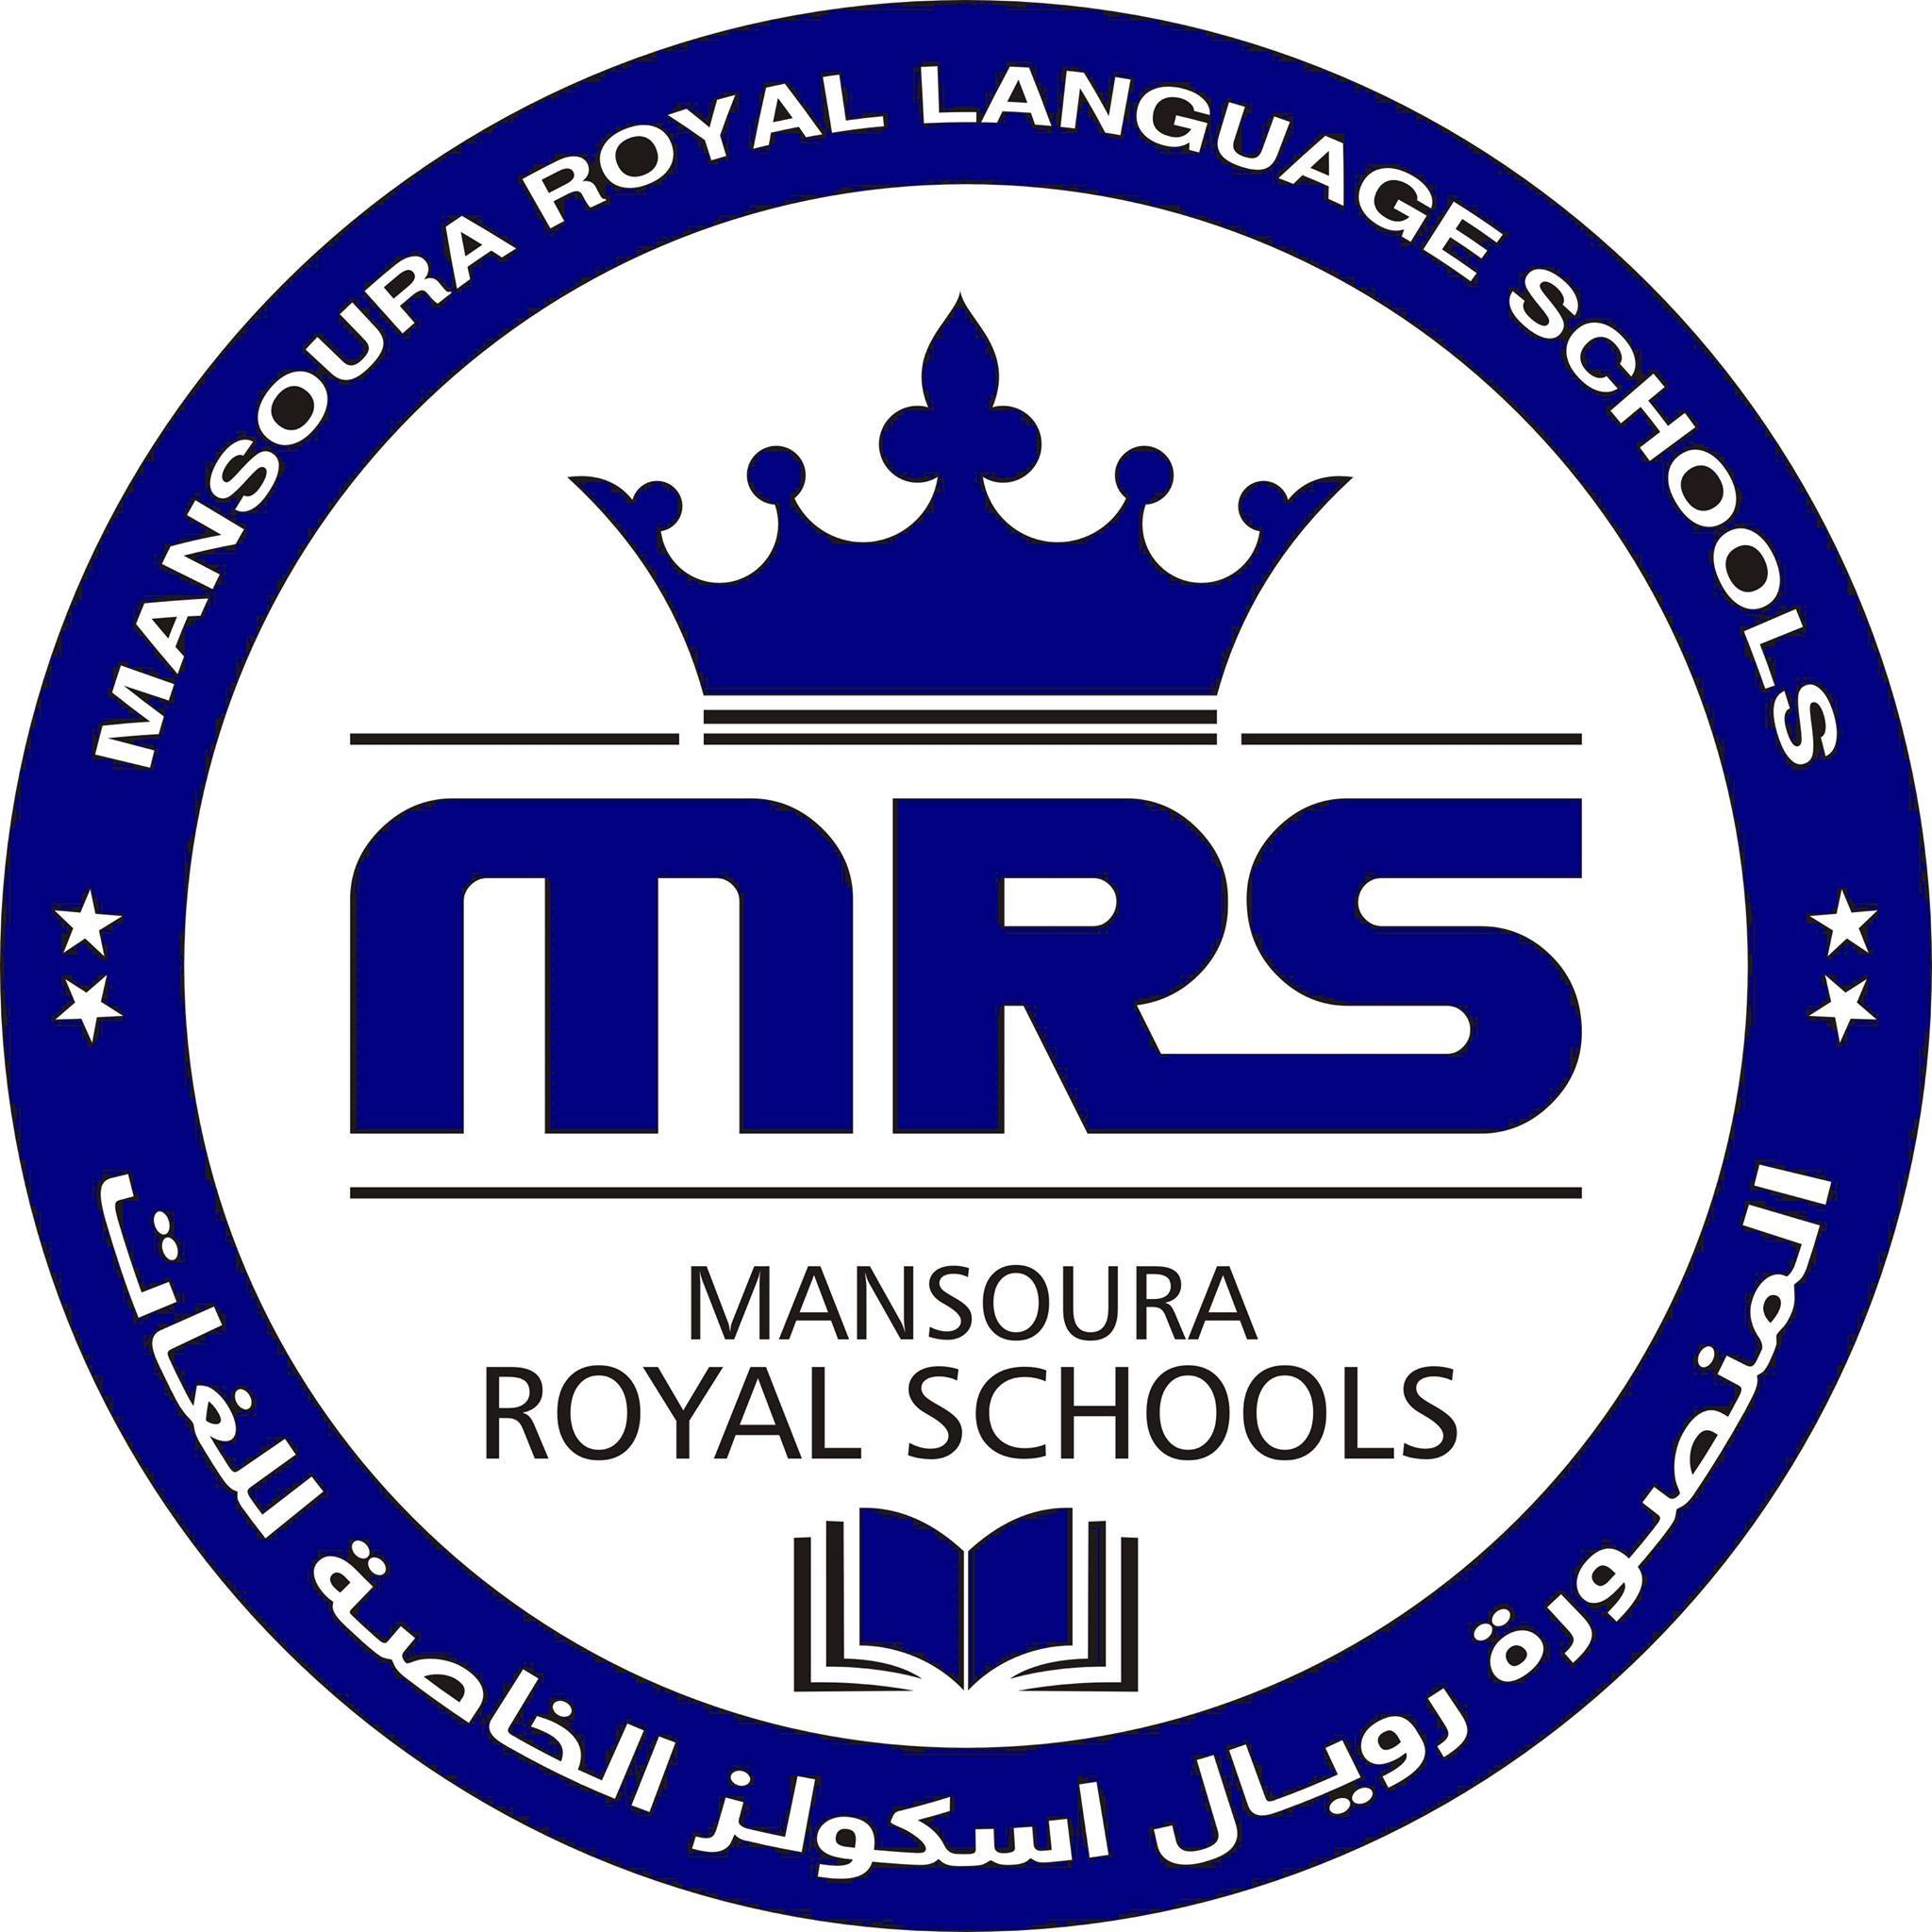 Mansoura Royal School